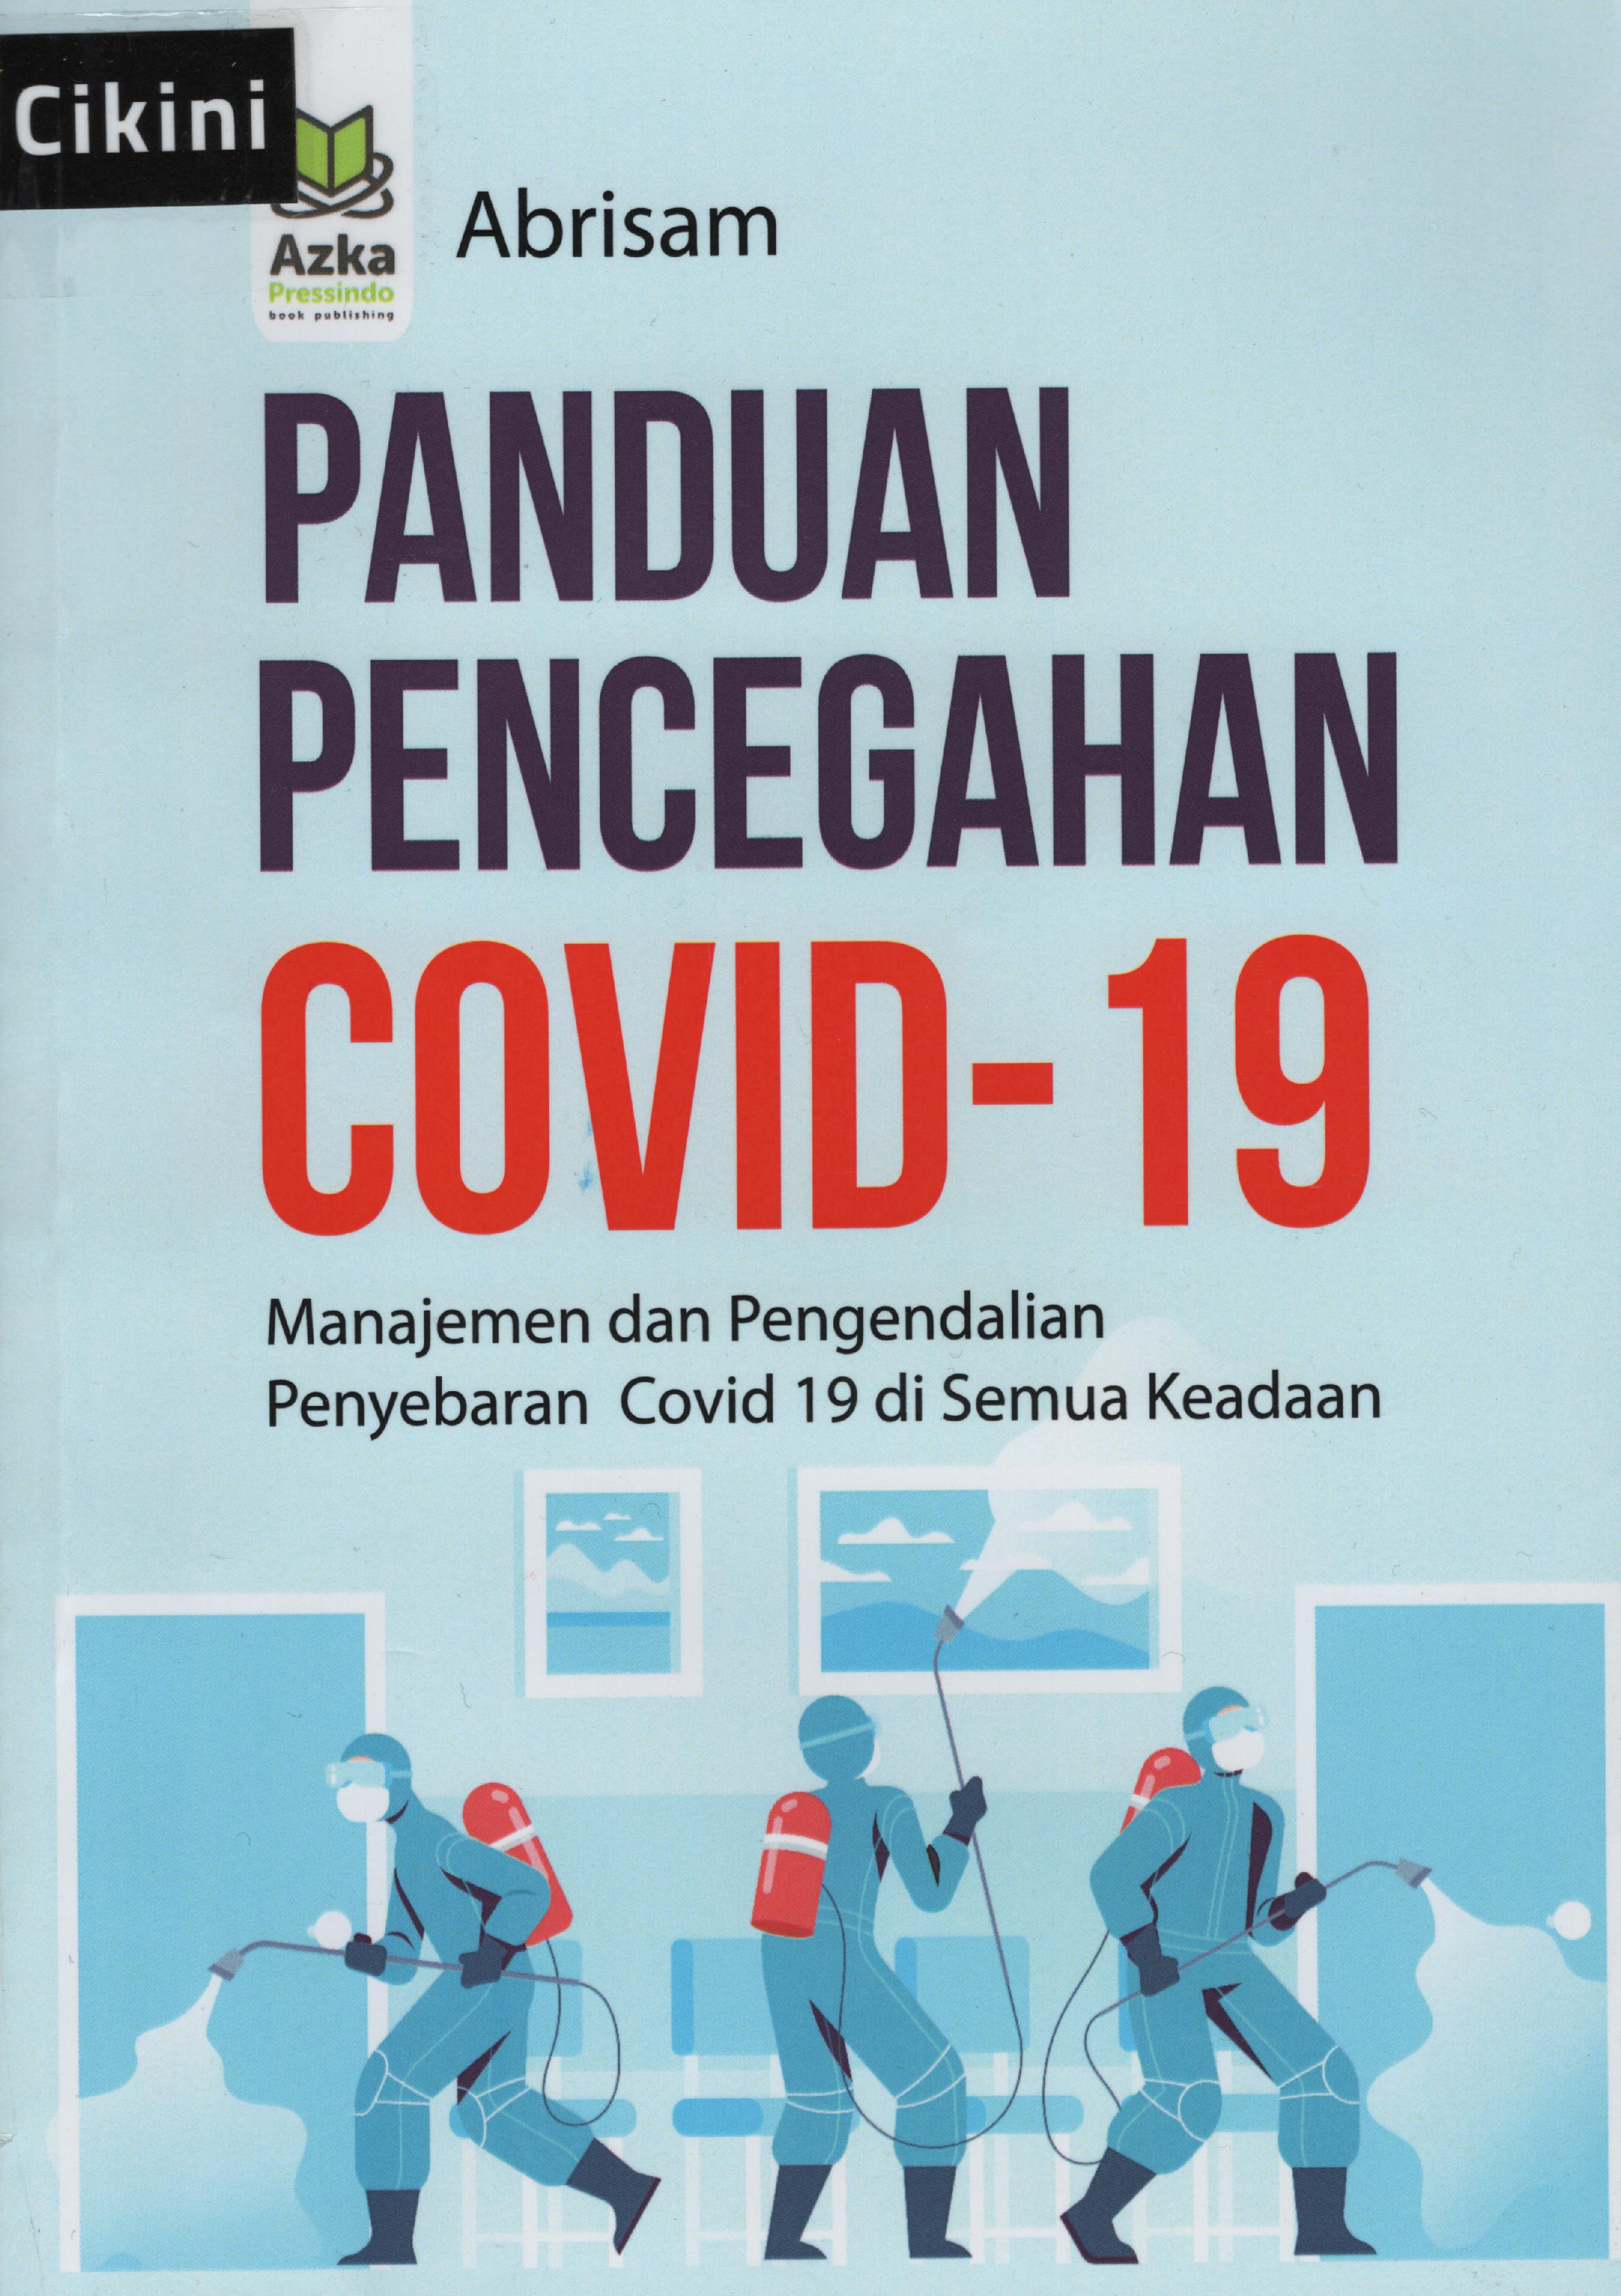 Panduan pencegahan COVID-19 :  manajemen dan pengendalian penyebaran Covid 19 di semua keadaan